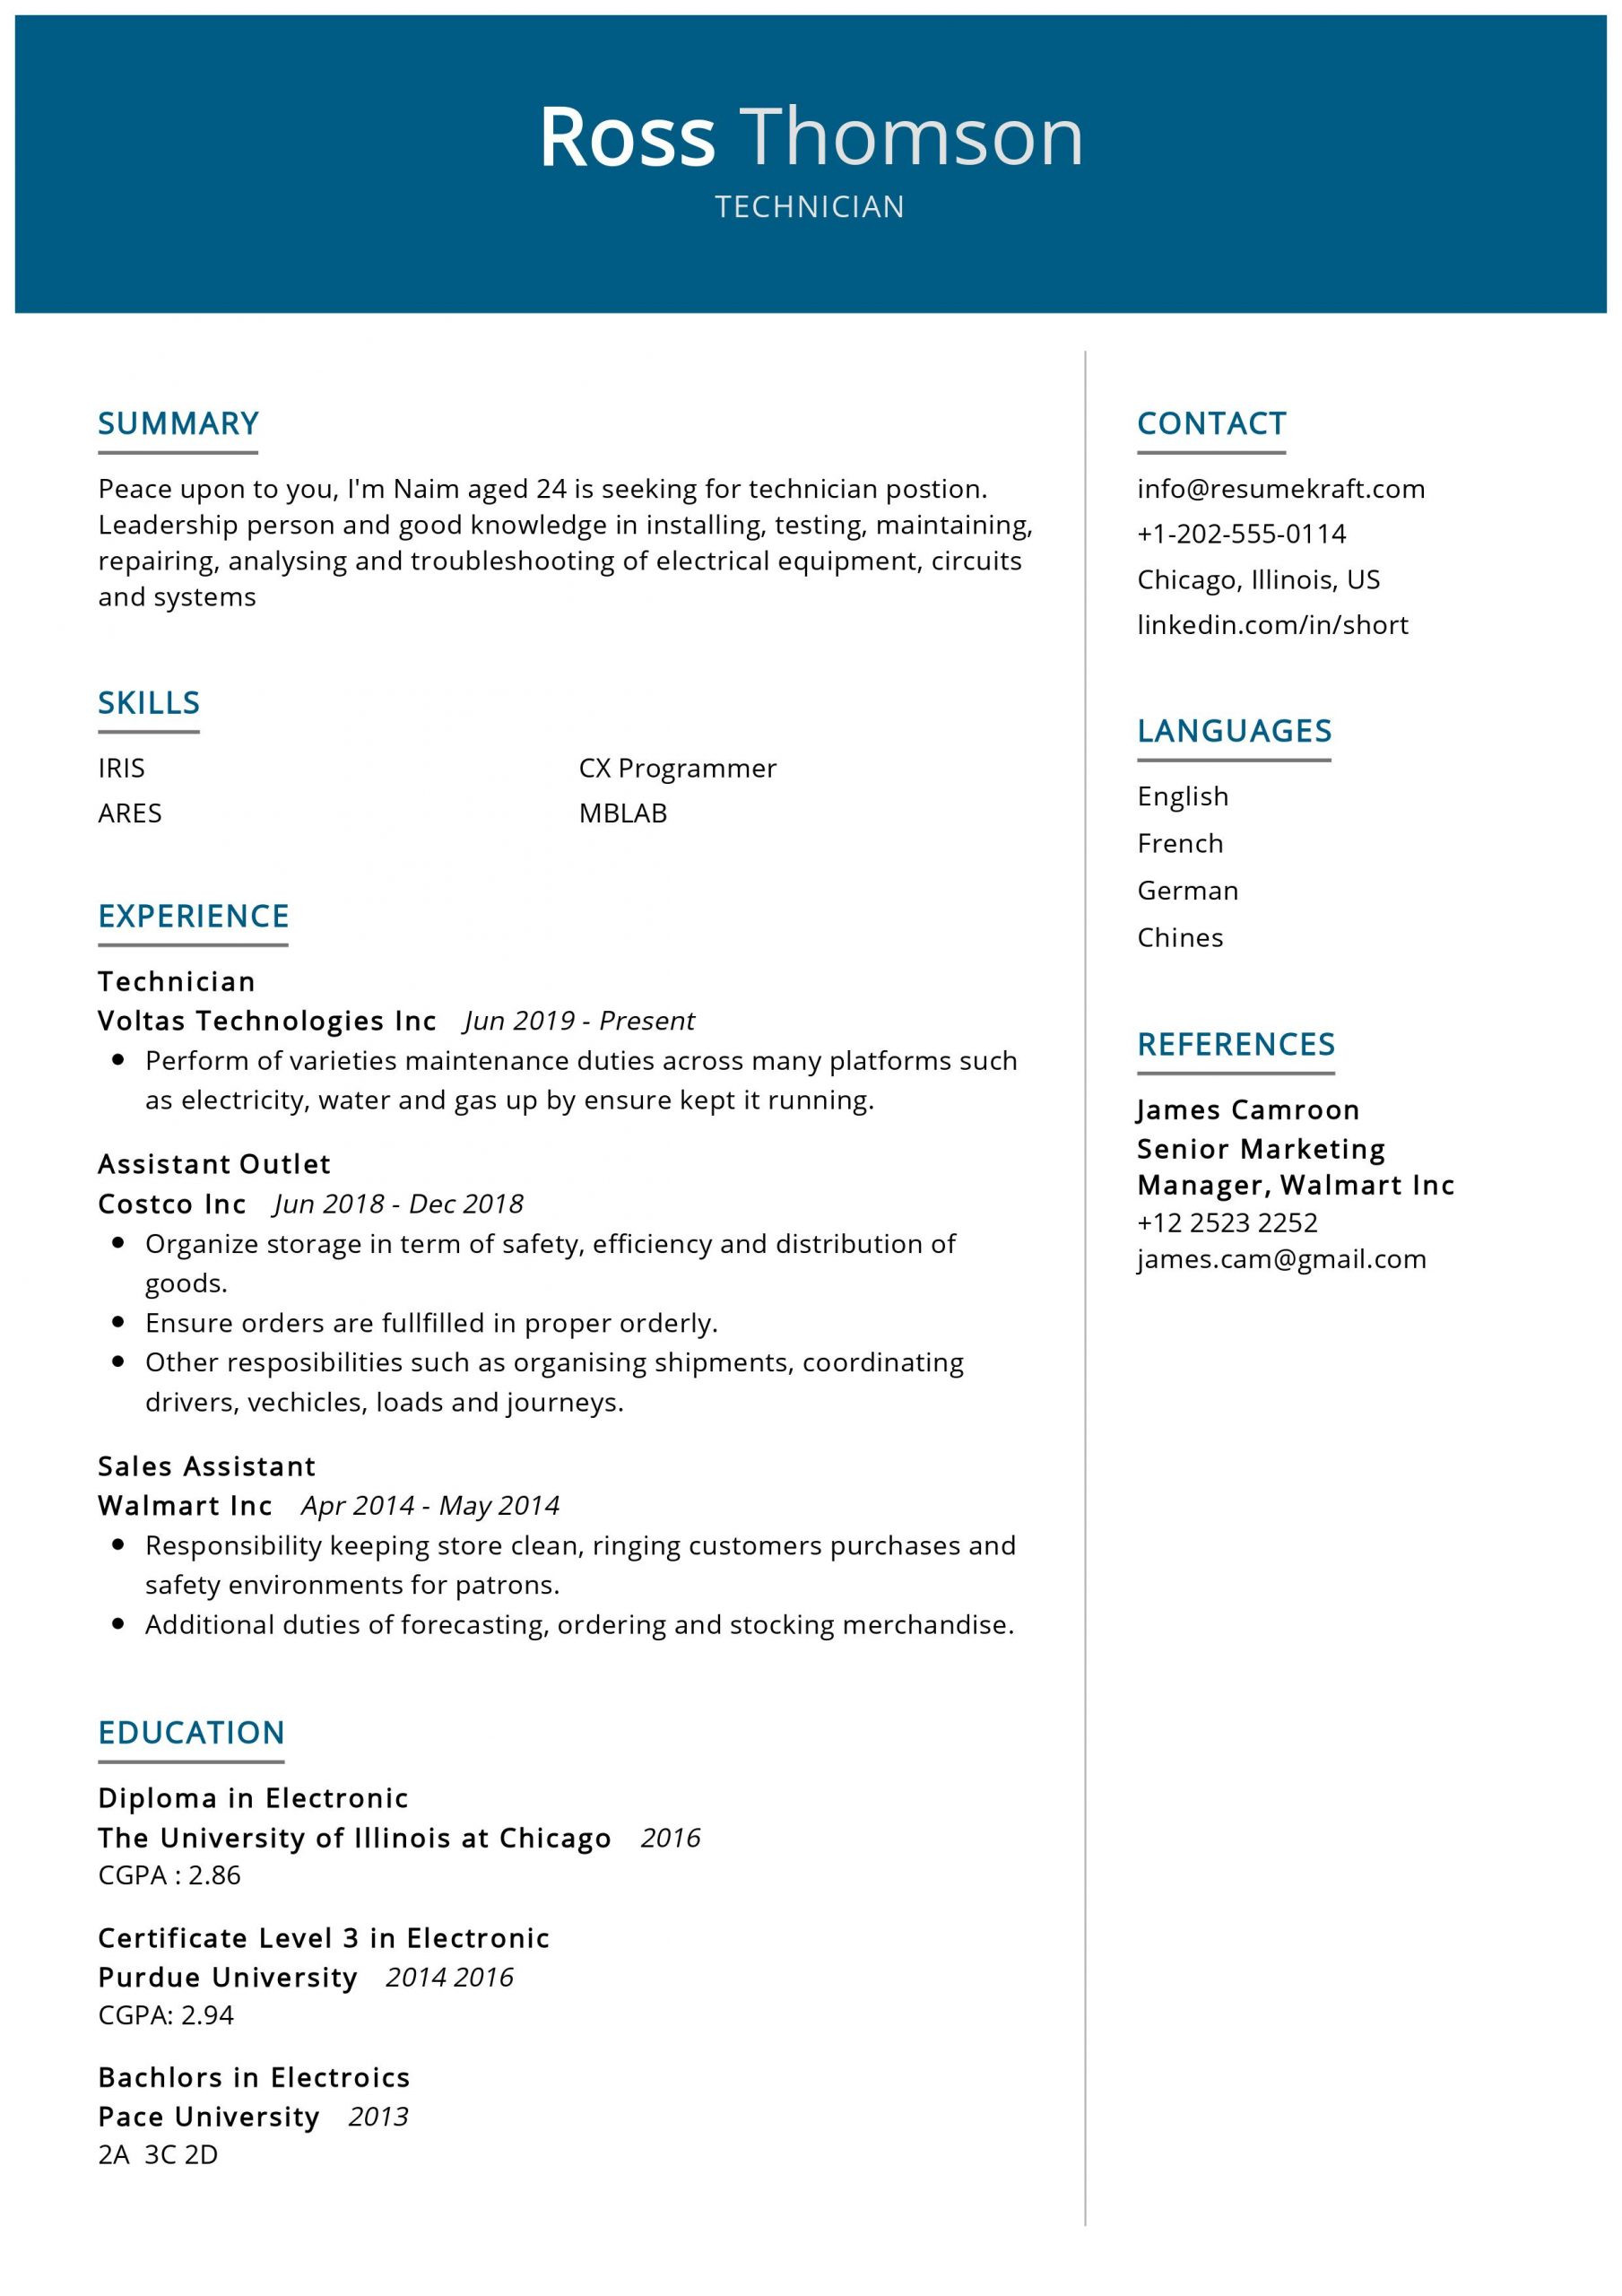 Resume Samples for A Tech Position Technician Resume Sample 2022 Writing Tips – Resumekraft